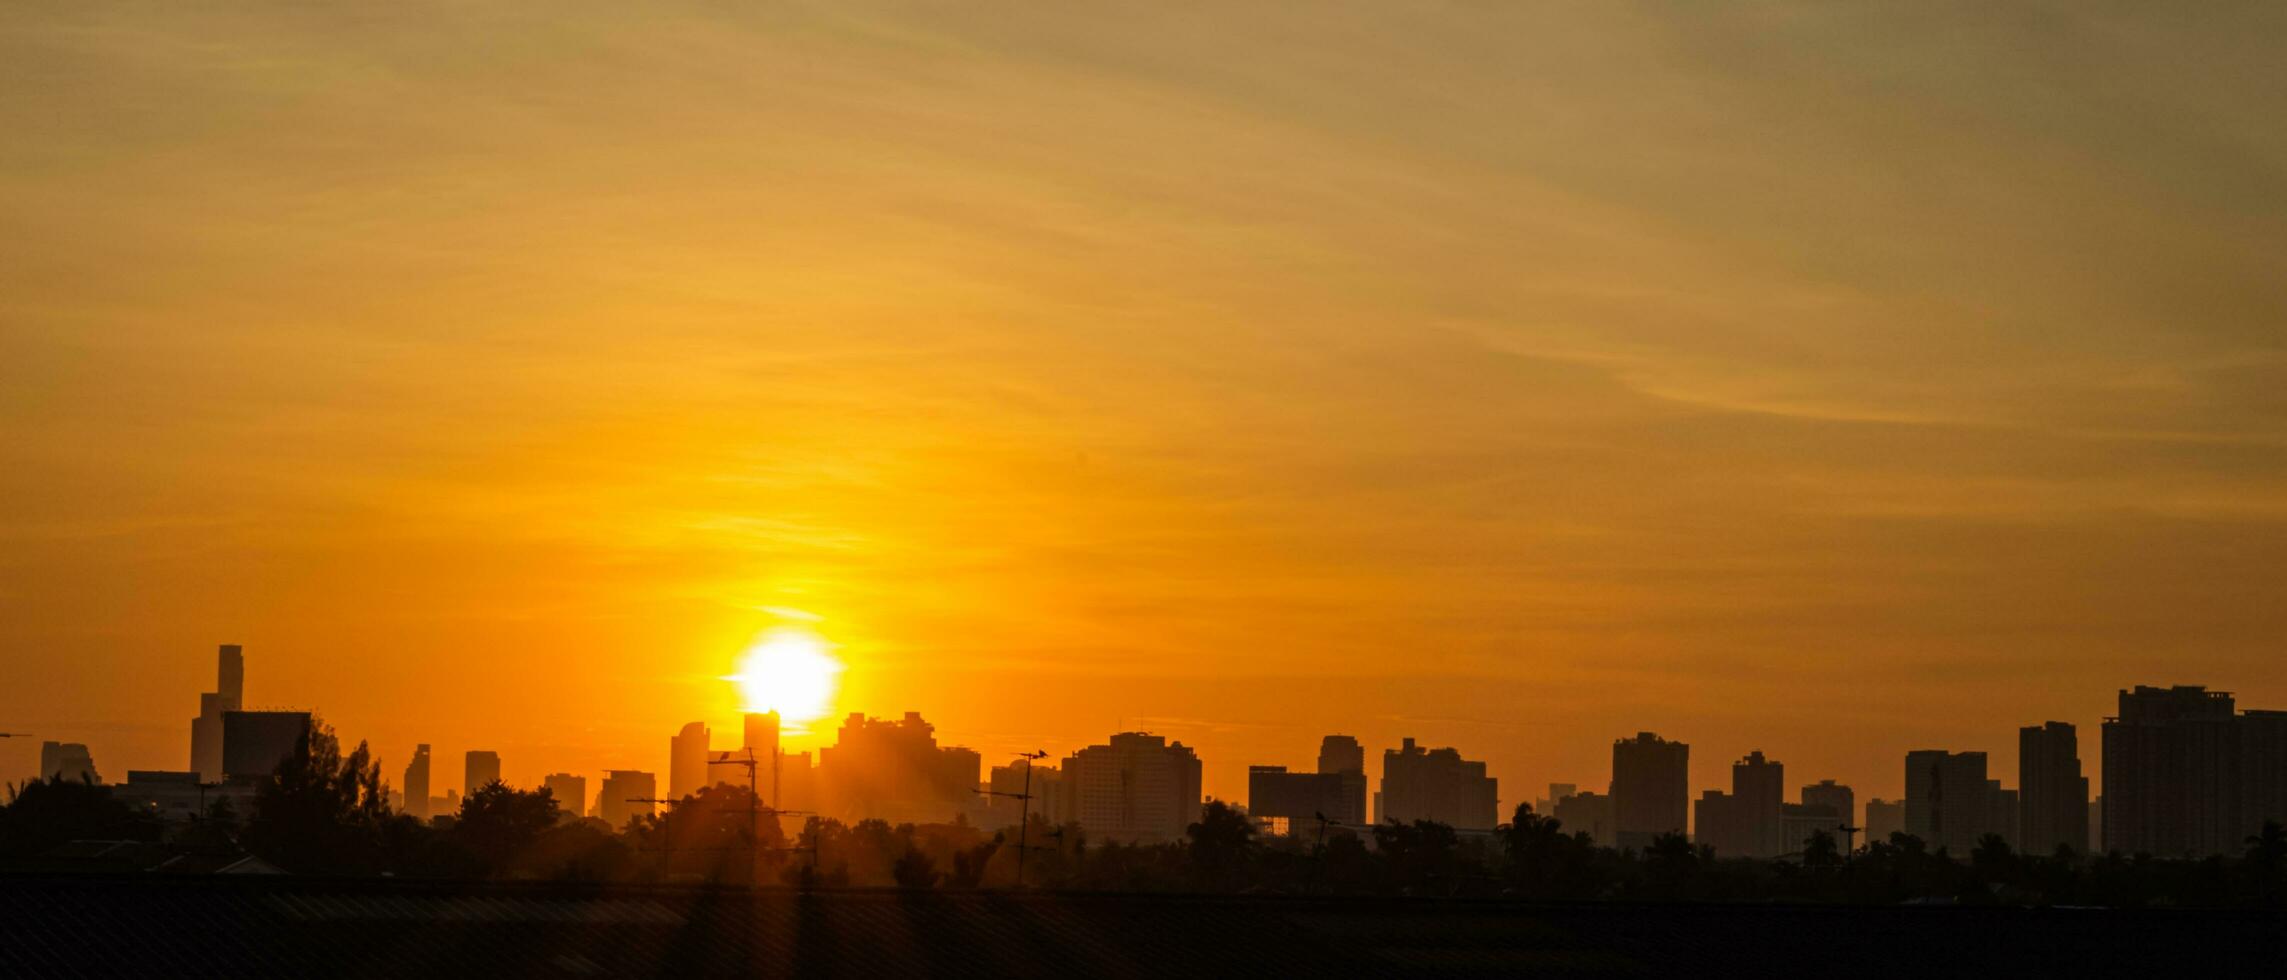 golden sun is setting over a city skyline photo